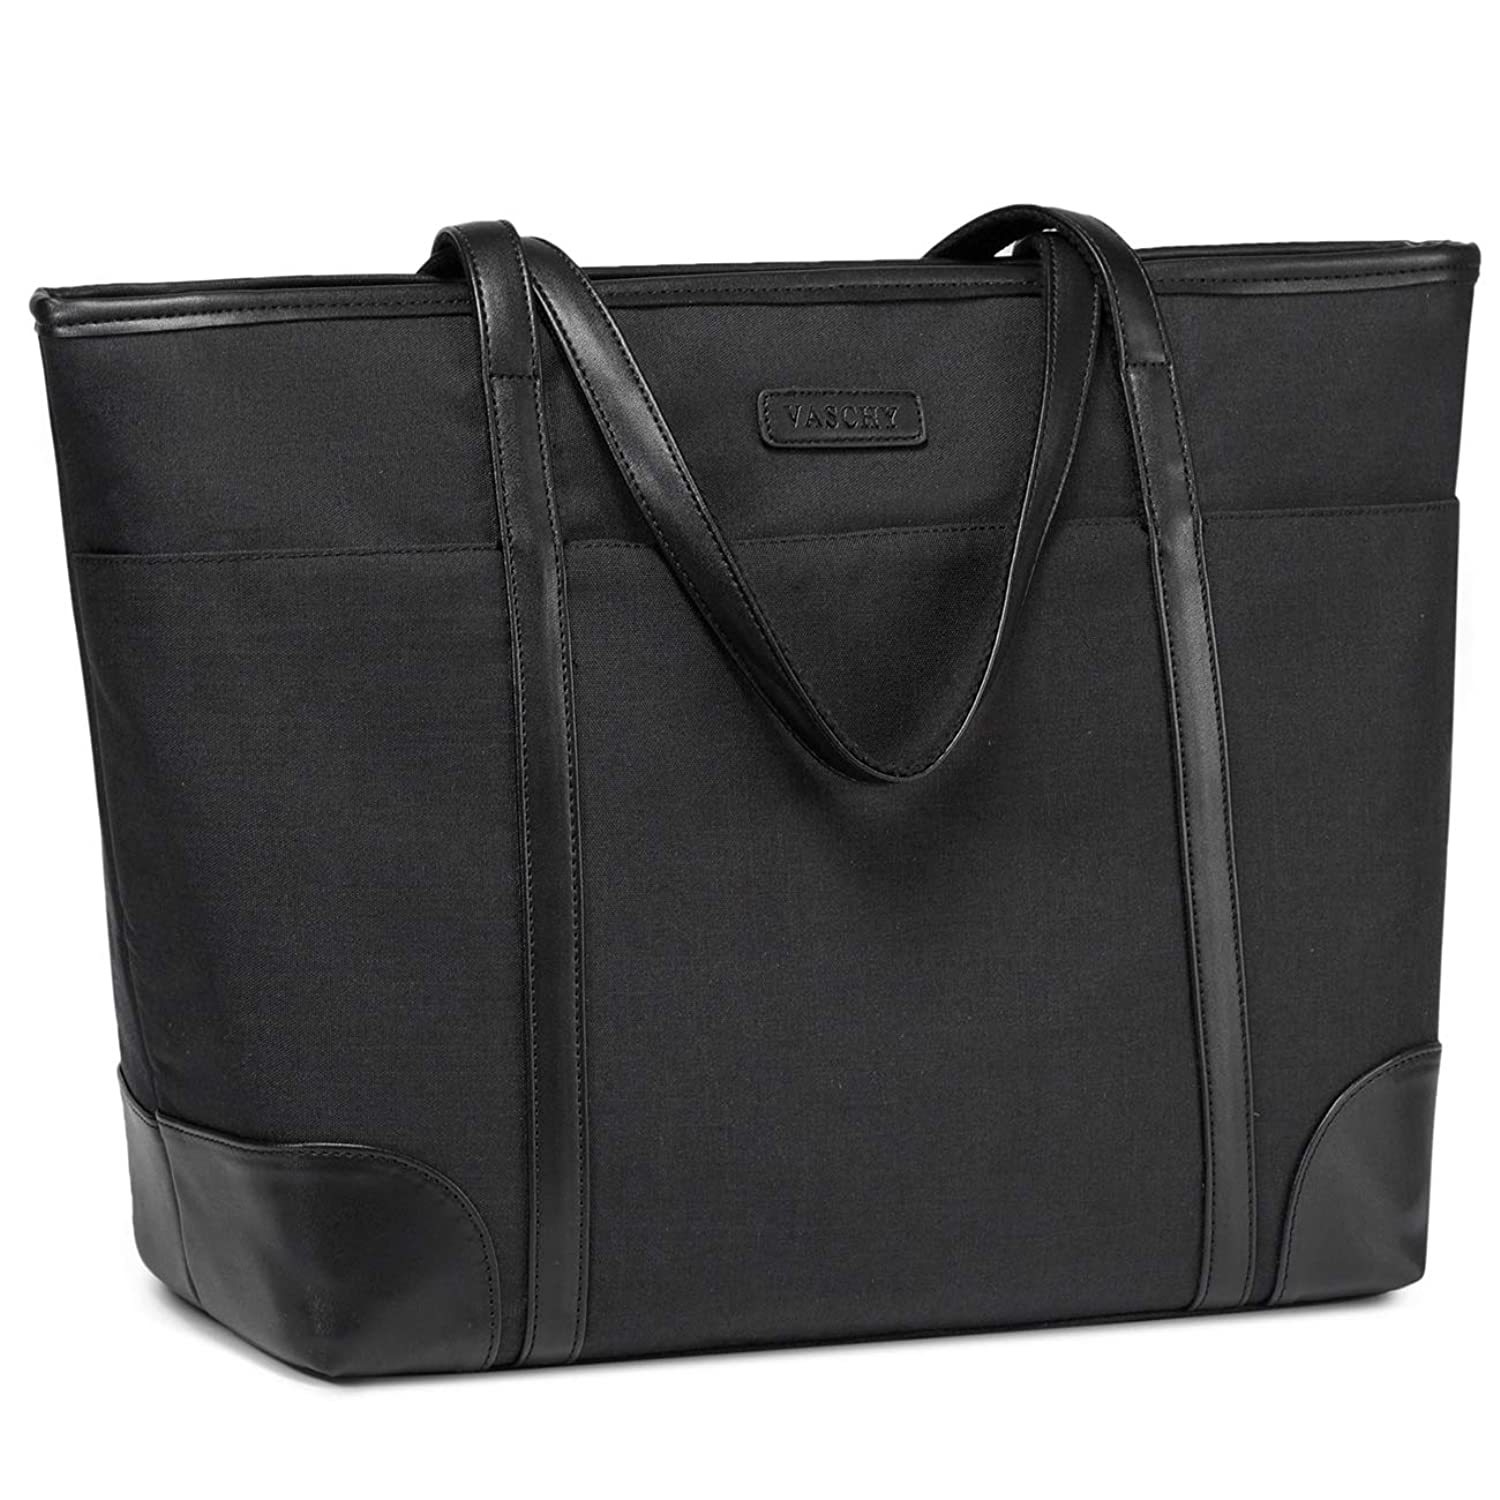 Laptop Tote Bag For Women, 15.6-17 Inch Satchel Shoulder Bag With Luggage Strap